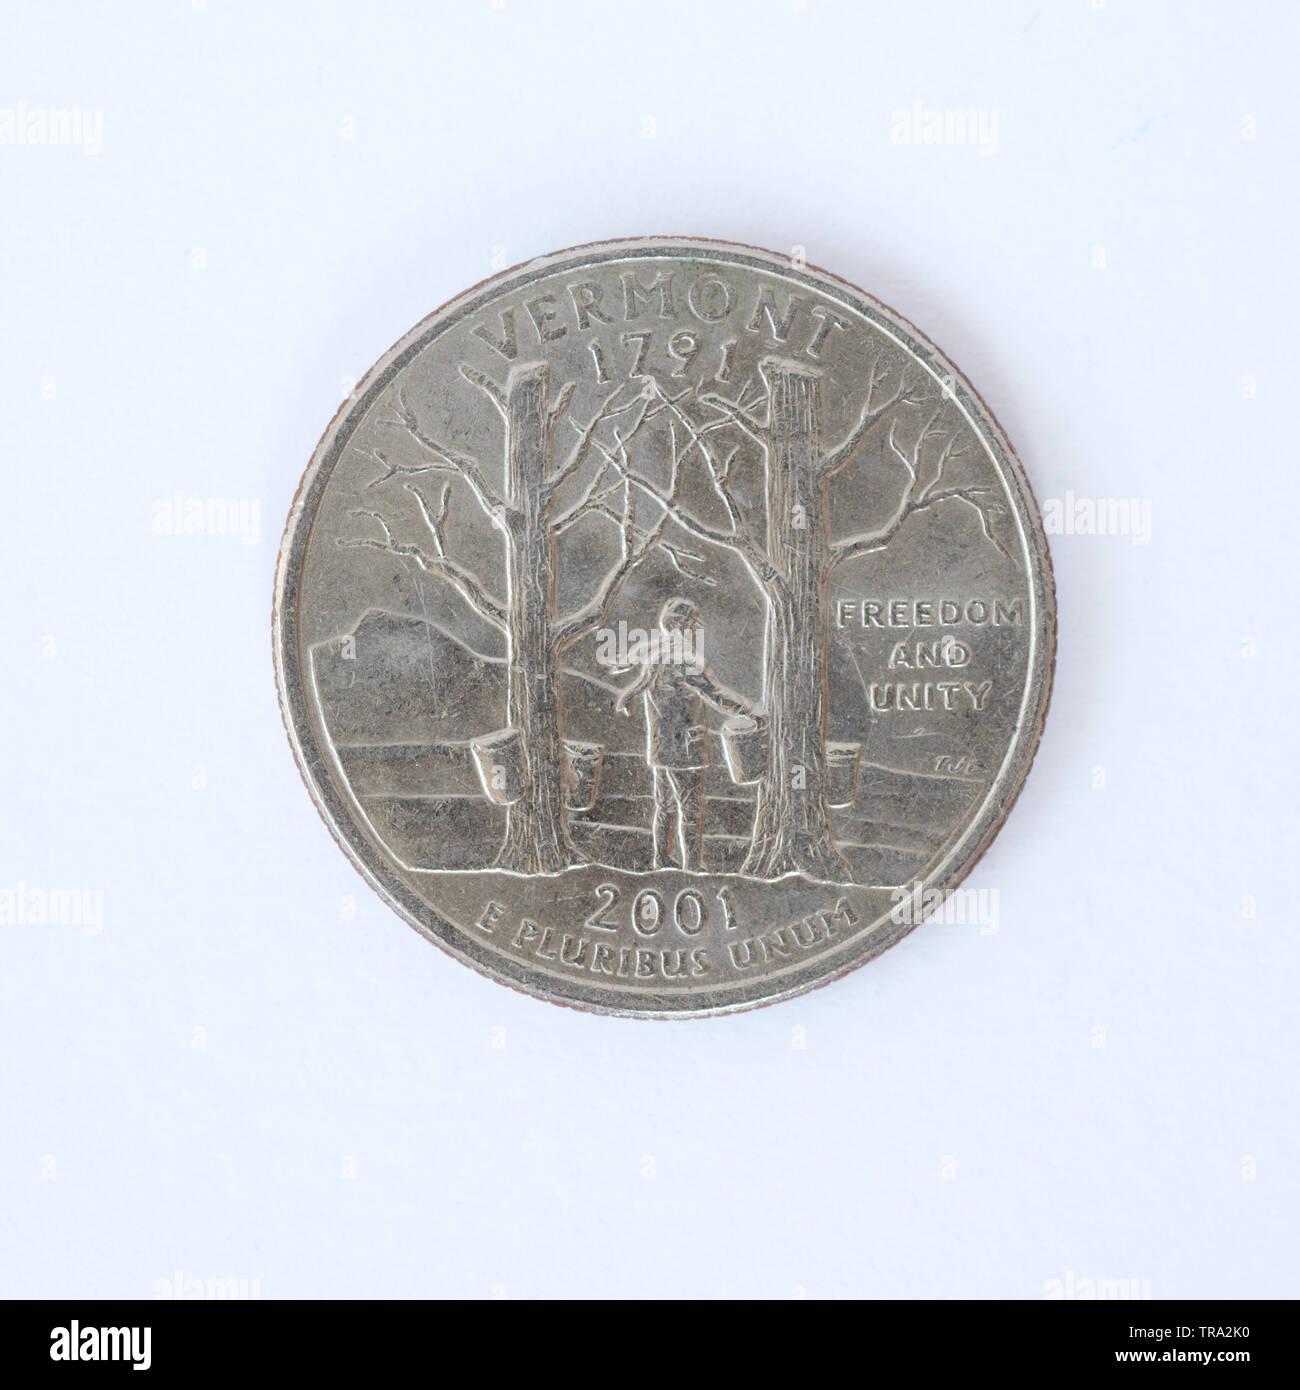 U.S. ¼ Dollar 'Washington Quarter' Coin - Stock Photo